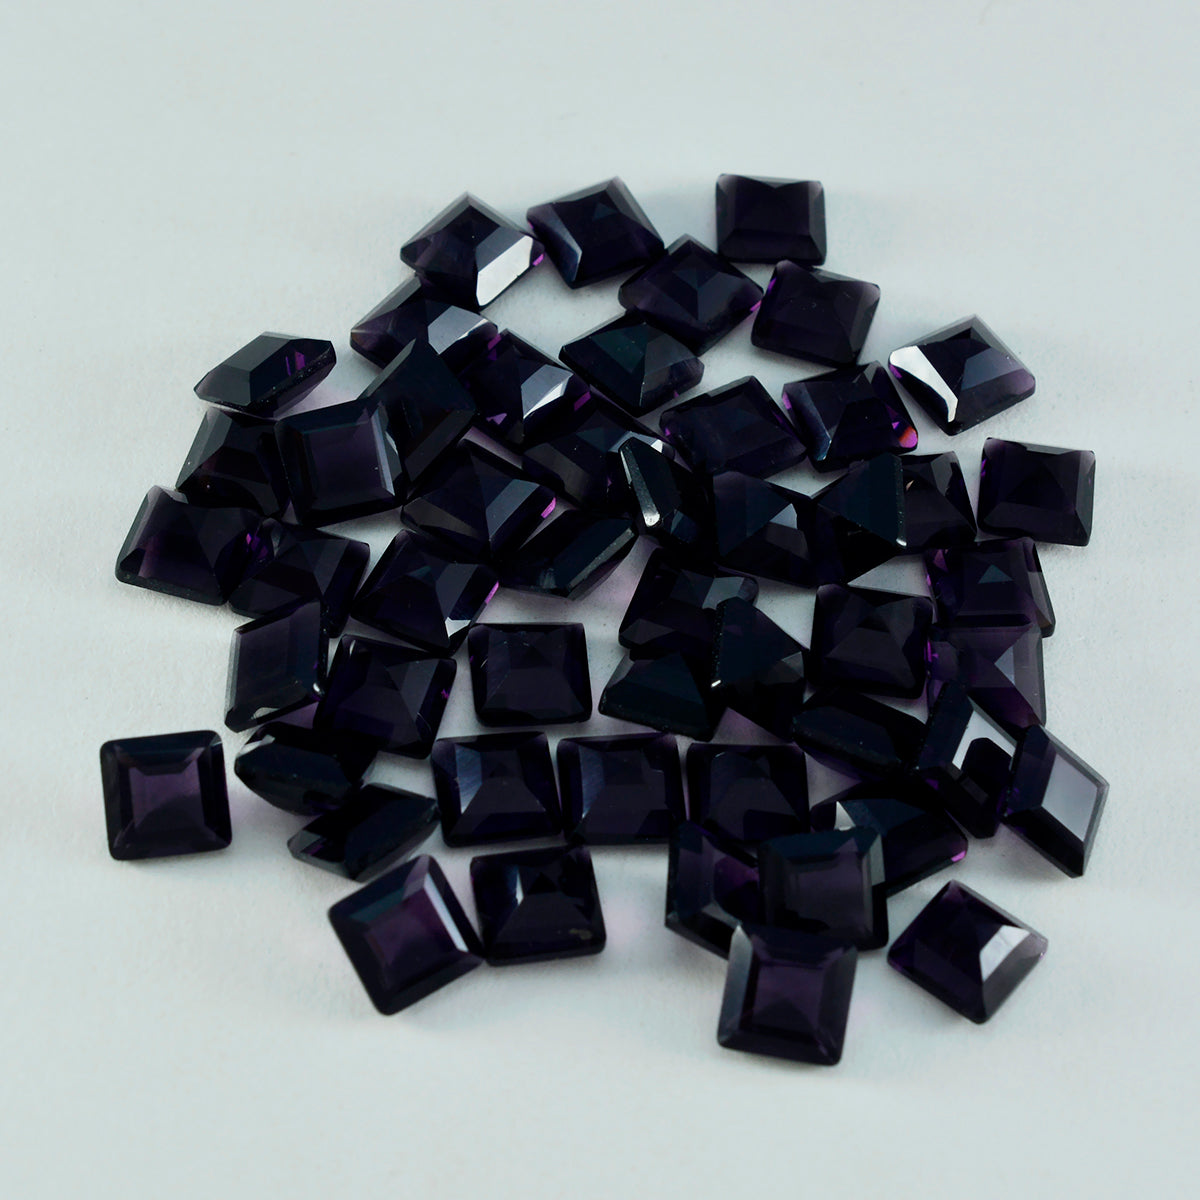 Riyogems 1PC Purple Amethyst CZ Faceted 7x7 mm Square Shape superb Quality Stone